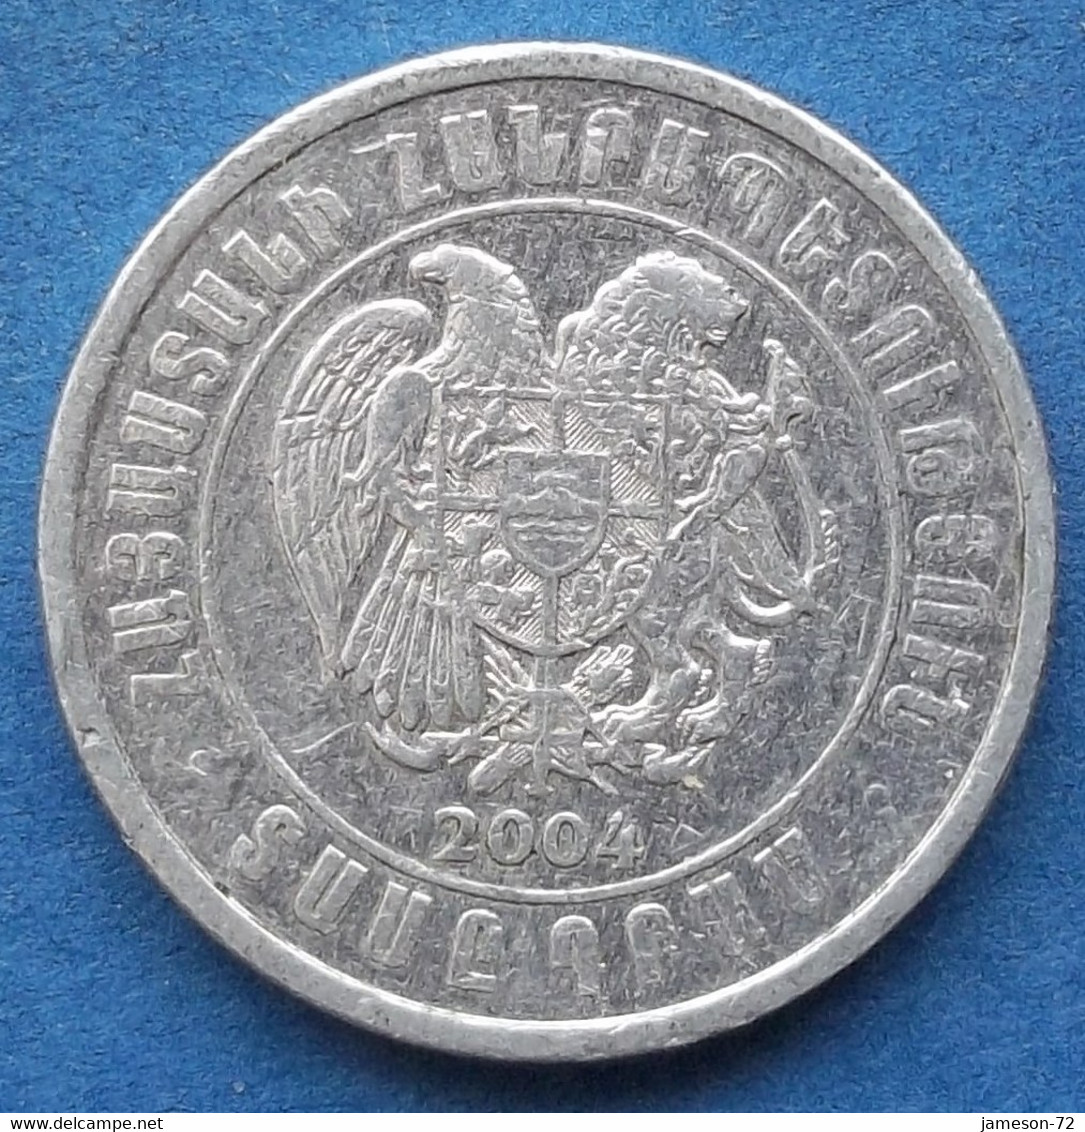 ARMENIA - 10 Dram 2004 KM# 112 Independent Republic (1991) - Edelweiss Coins - Arménie